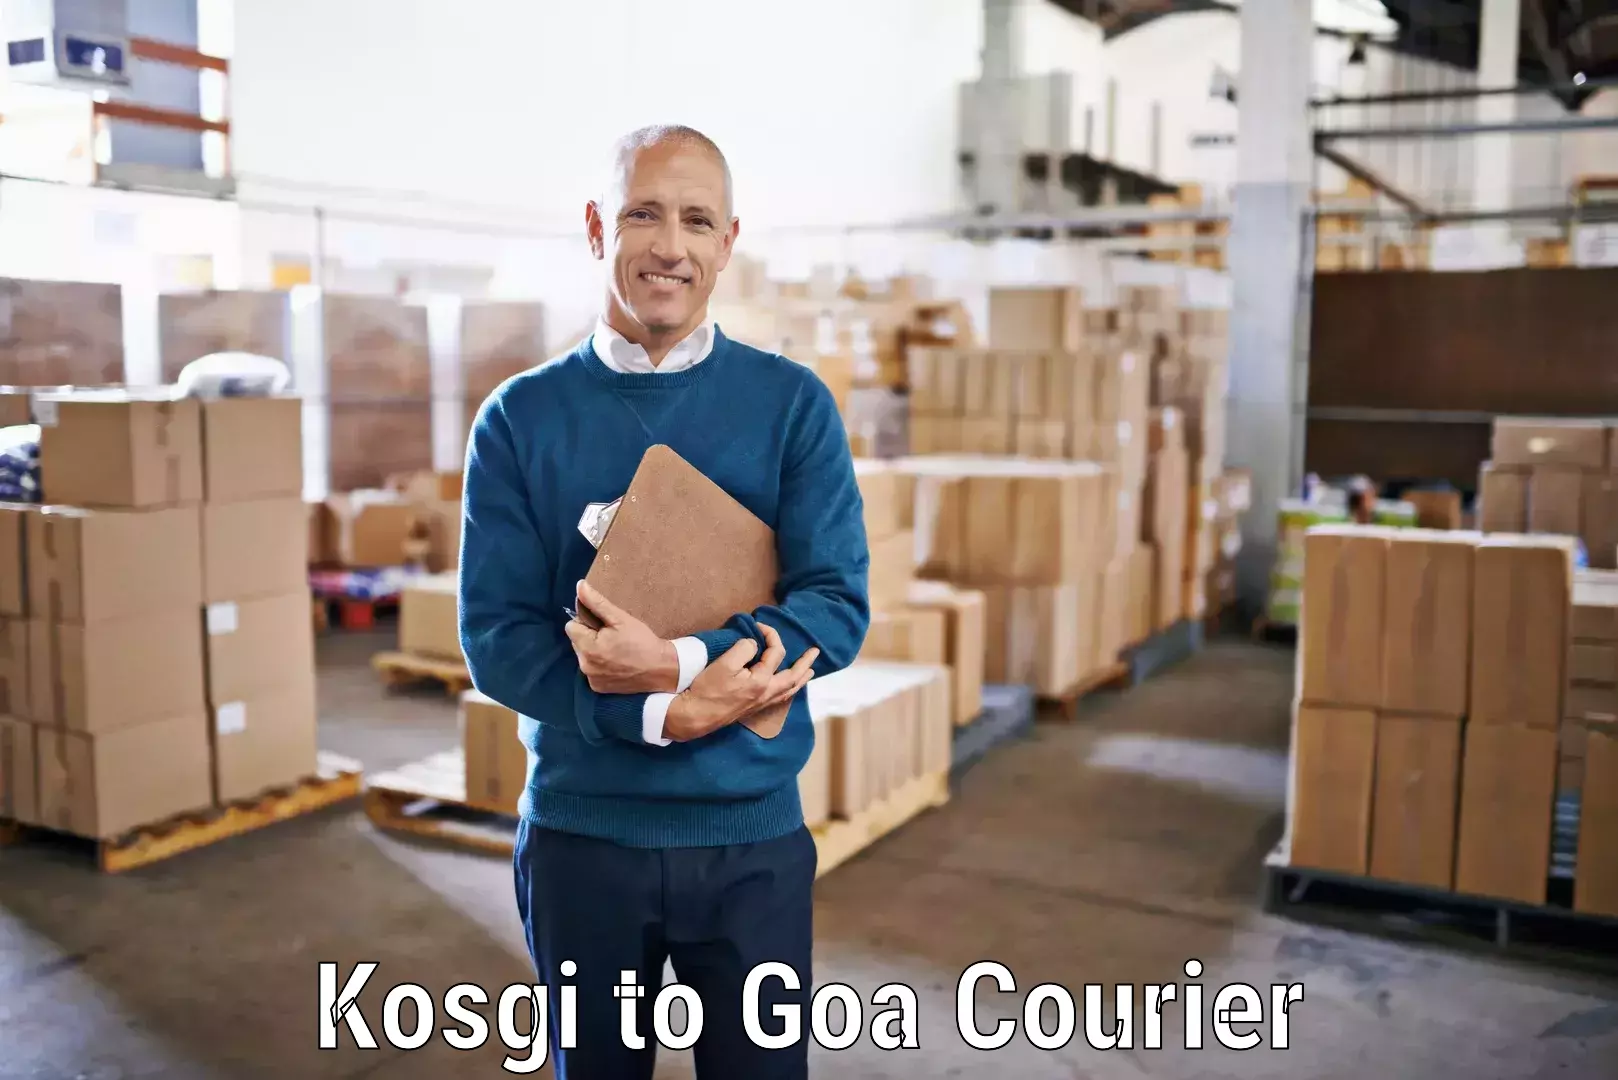 State-of-the-art courier technology Kosgi to Goa University